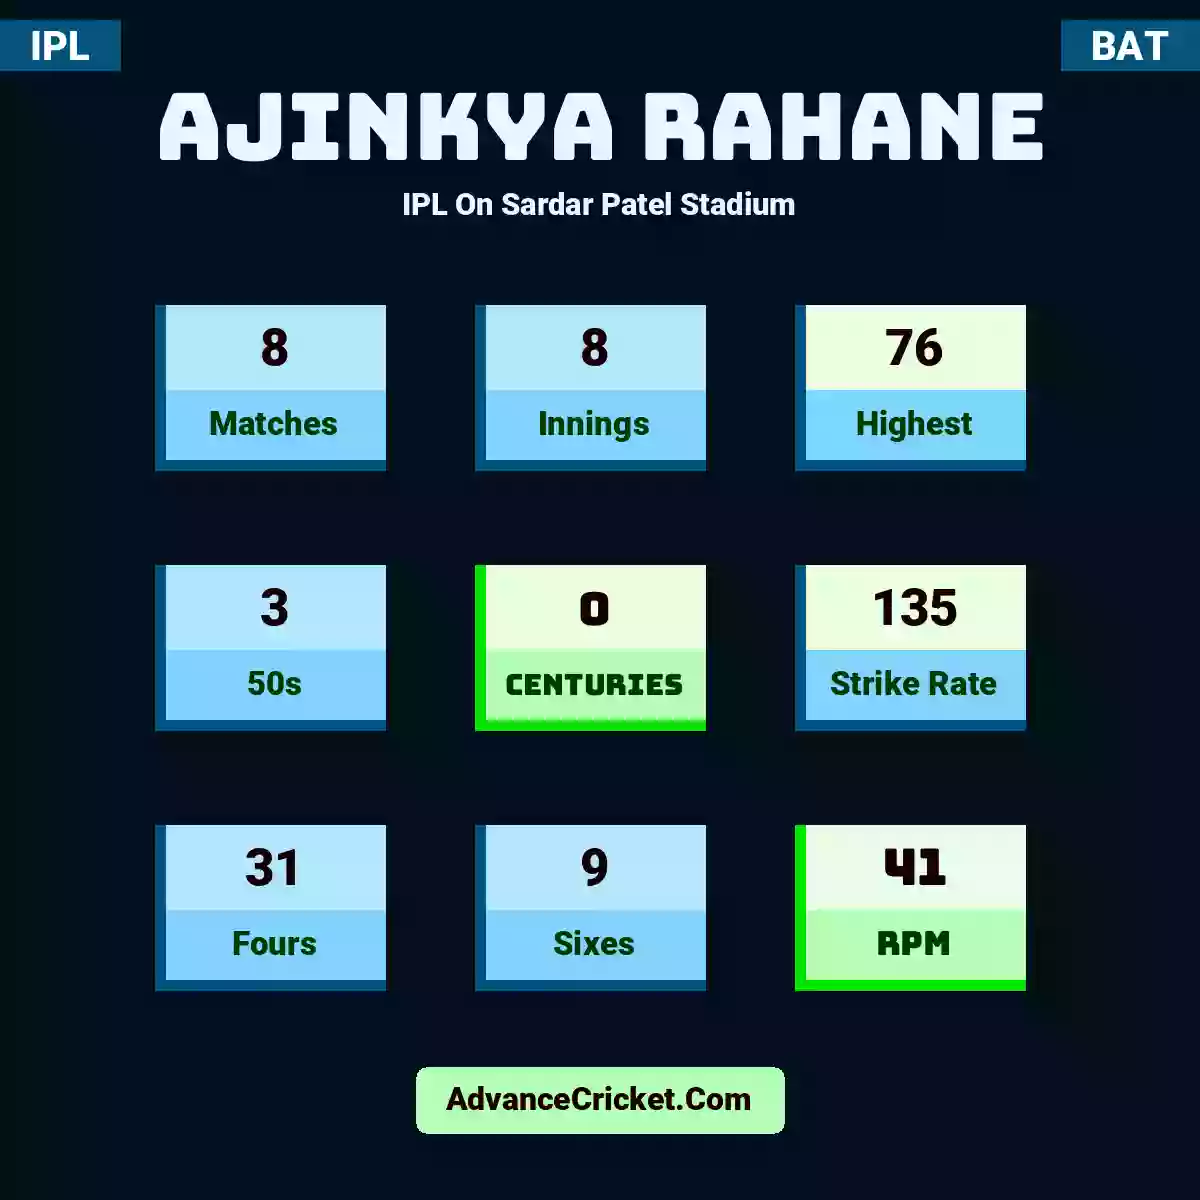 Ajinkya Rahane IPL  On Sardar Patel Stadium, Ajinkya Rahane played 8 matches, scored 76 runs as highest, 3 half-centuries, and 0 centuries, with a strike rate of 135. A.Rahane hit 31 fours and 9 sixes, with an RPM of 41.